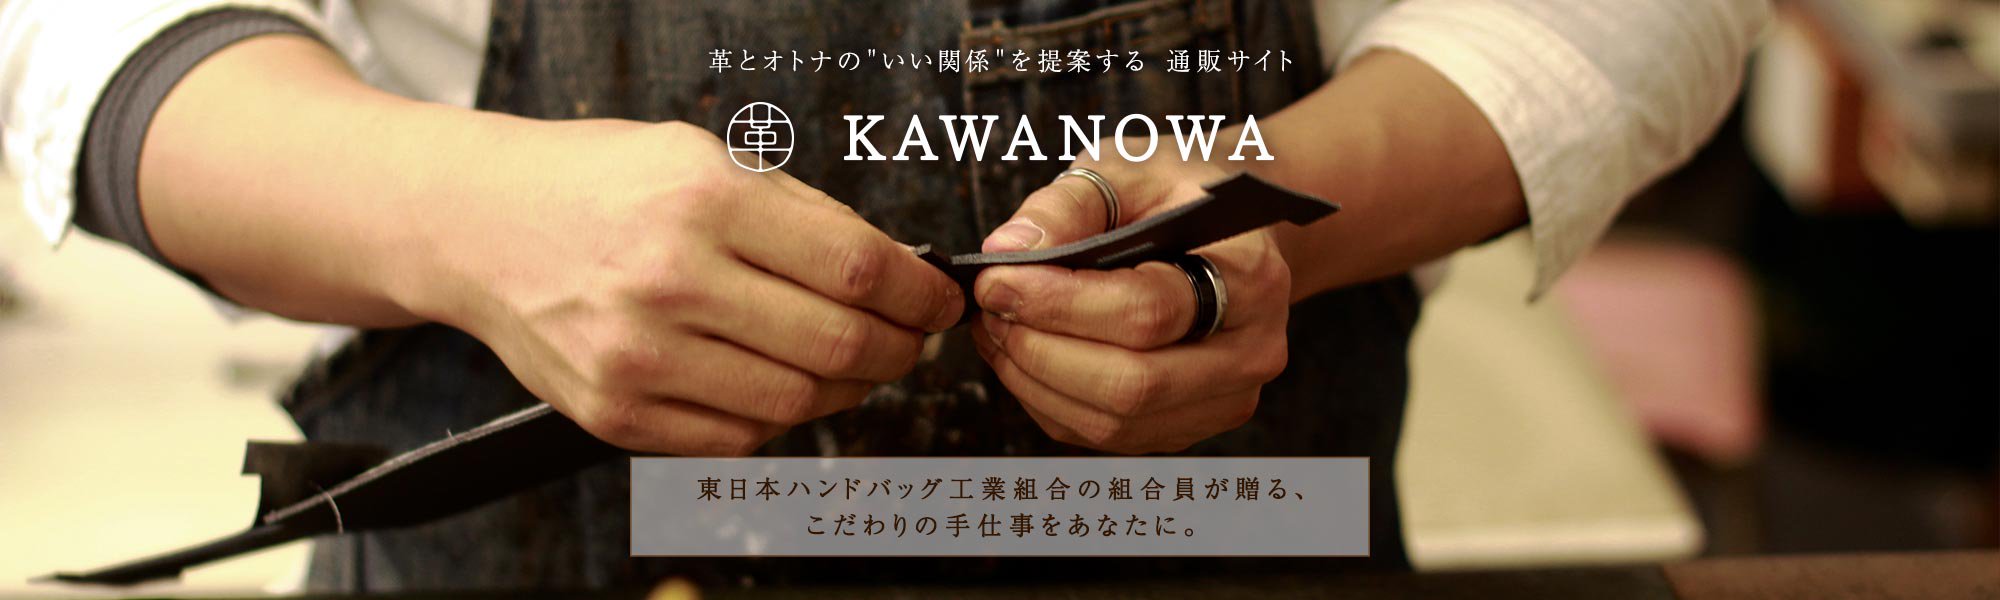 KAWANOWA-日本の革工房・職人を応援しよう